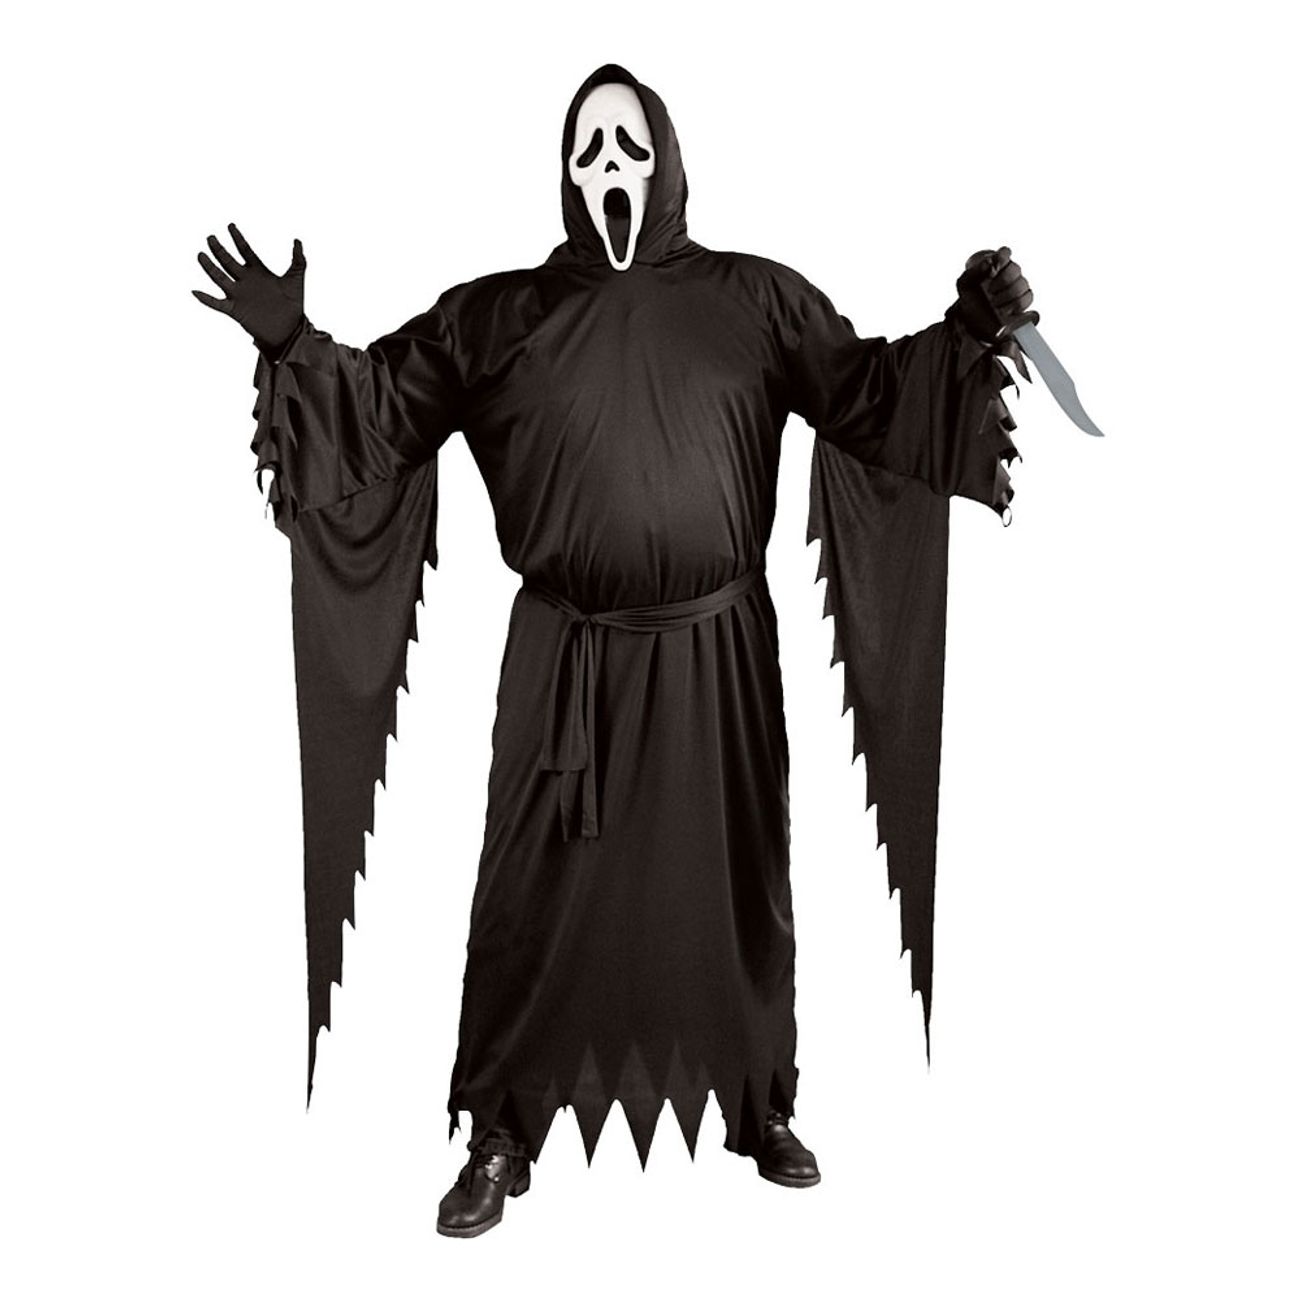 lettelse skulder anbefale Scream Plus-size Kostume | Partykungen